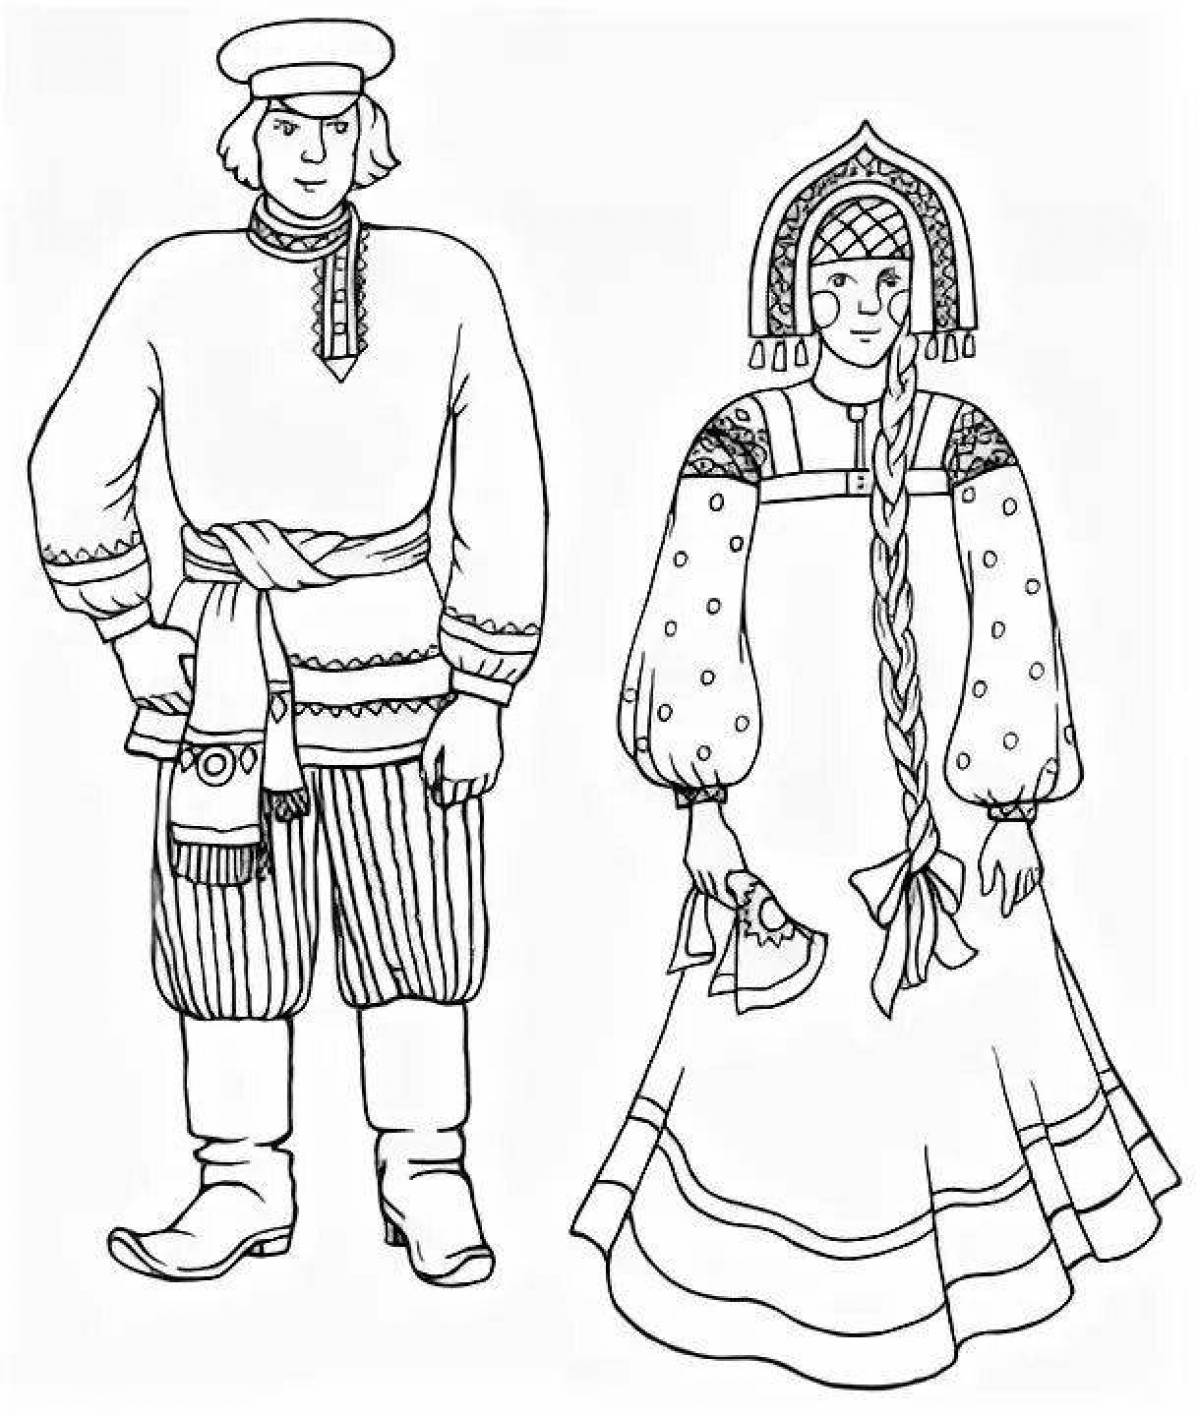 Decorative Russian folk costume for men